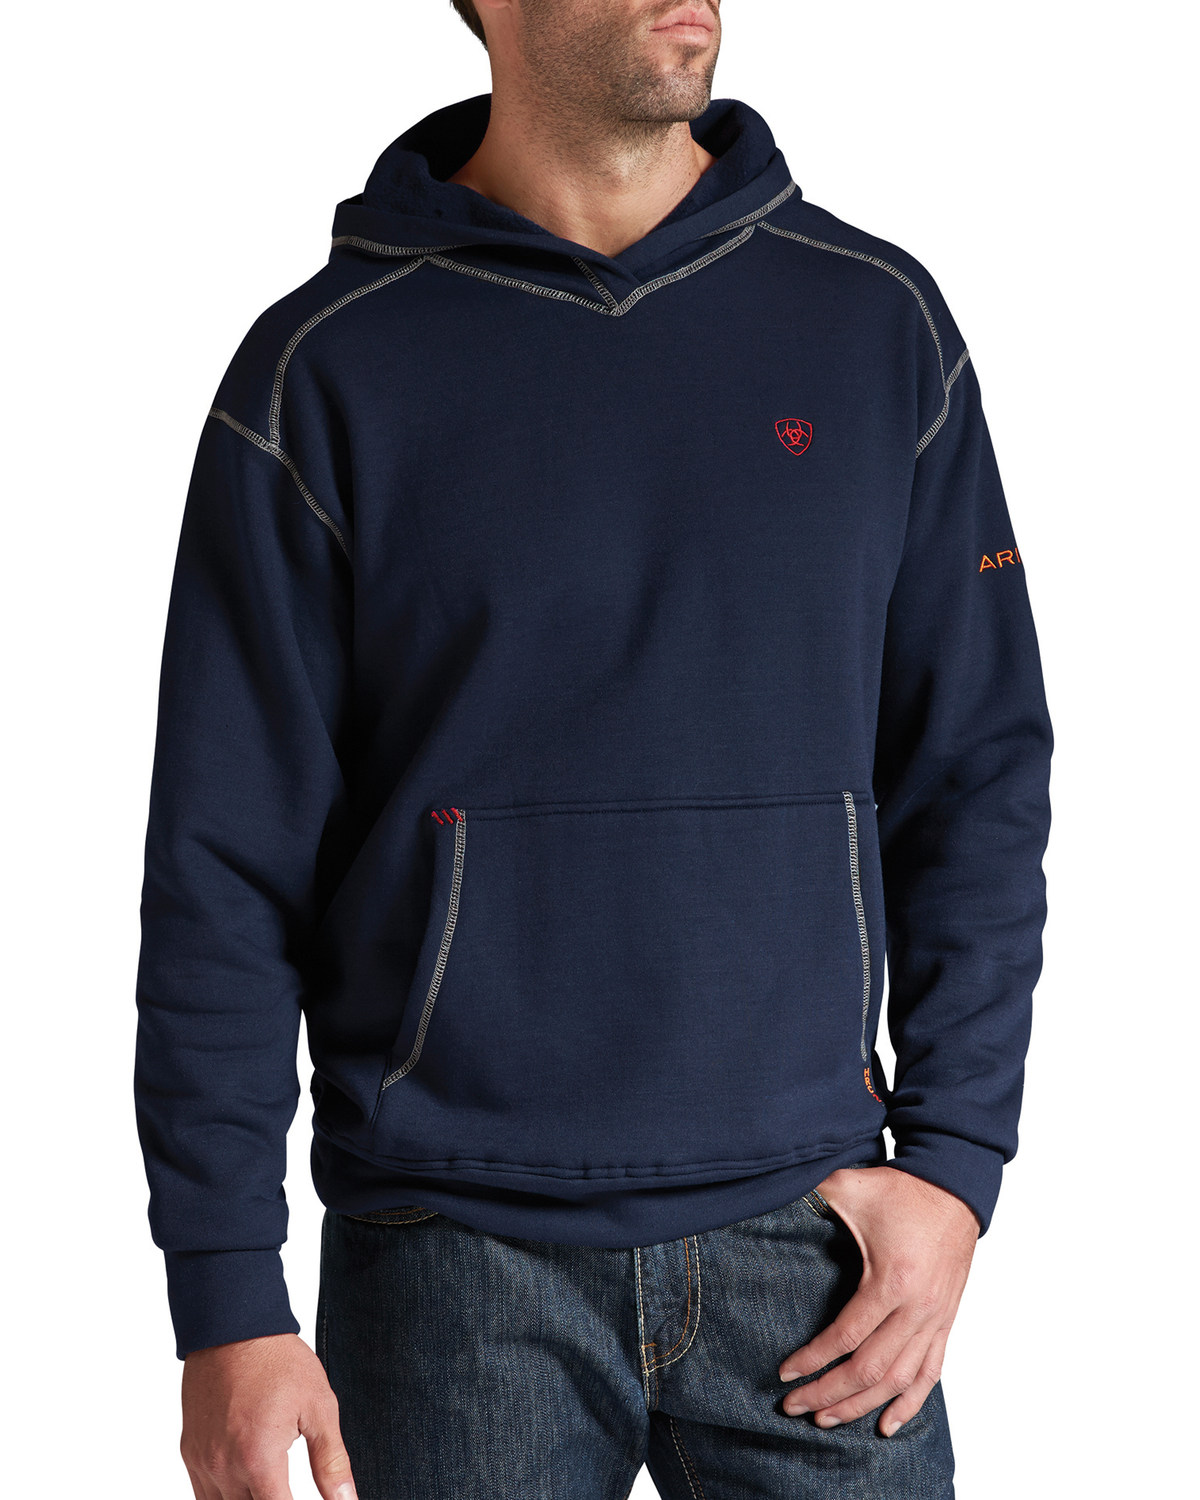 Ariat Men's Flame-Resistant Polartec Hooded Work Sweatshirt - Big and Tall